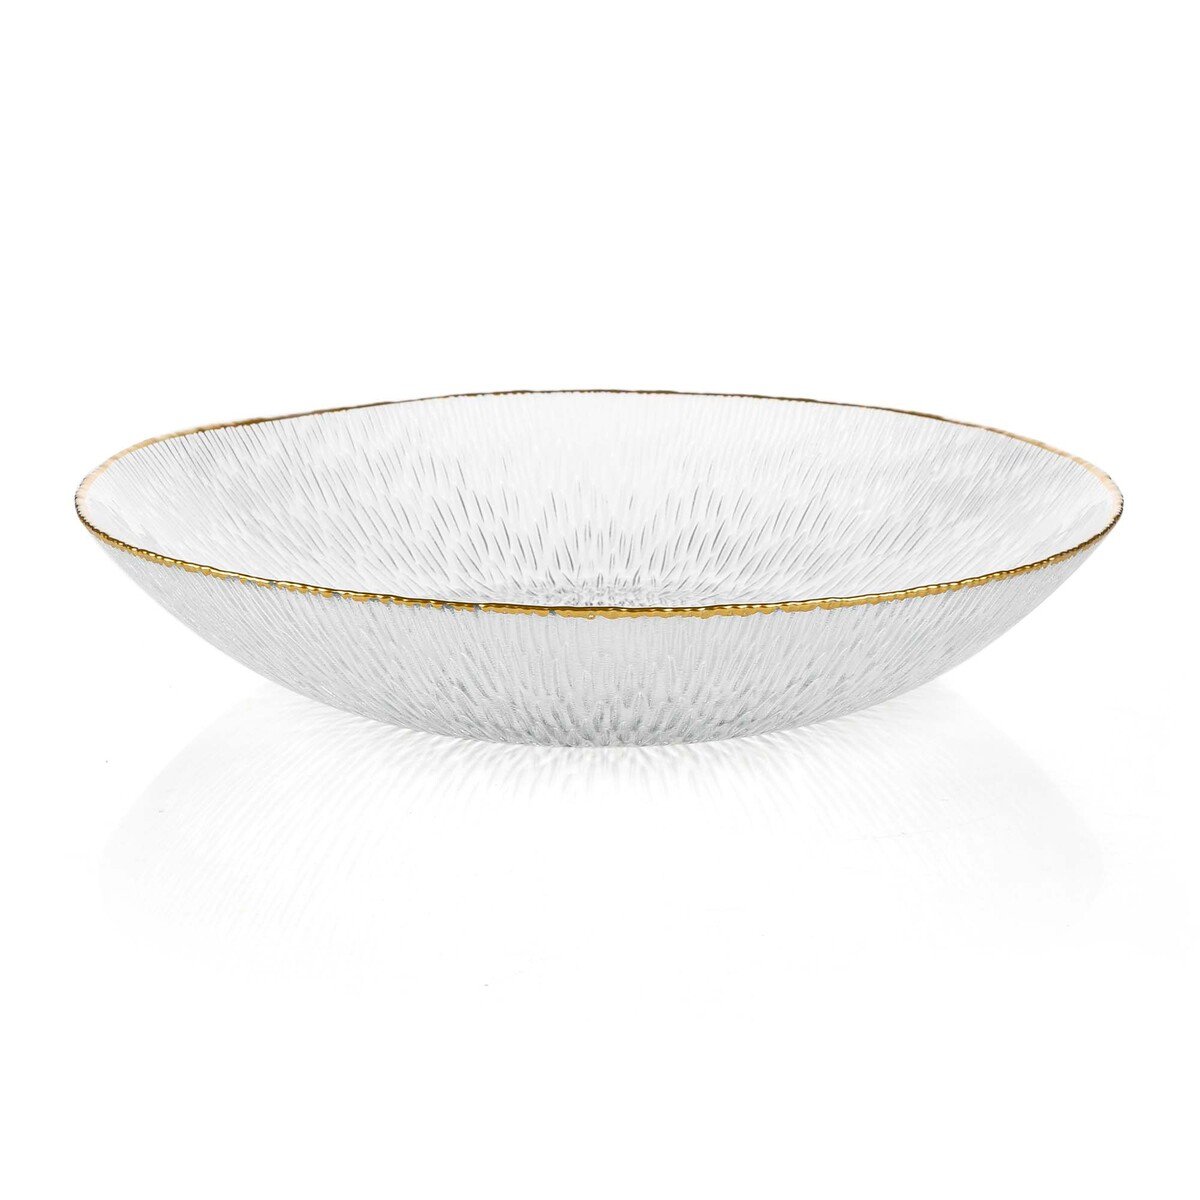 Glascom Decorative Glass Bowl, 30 cm, FV33